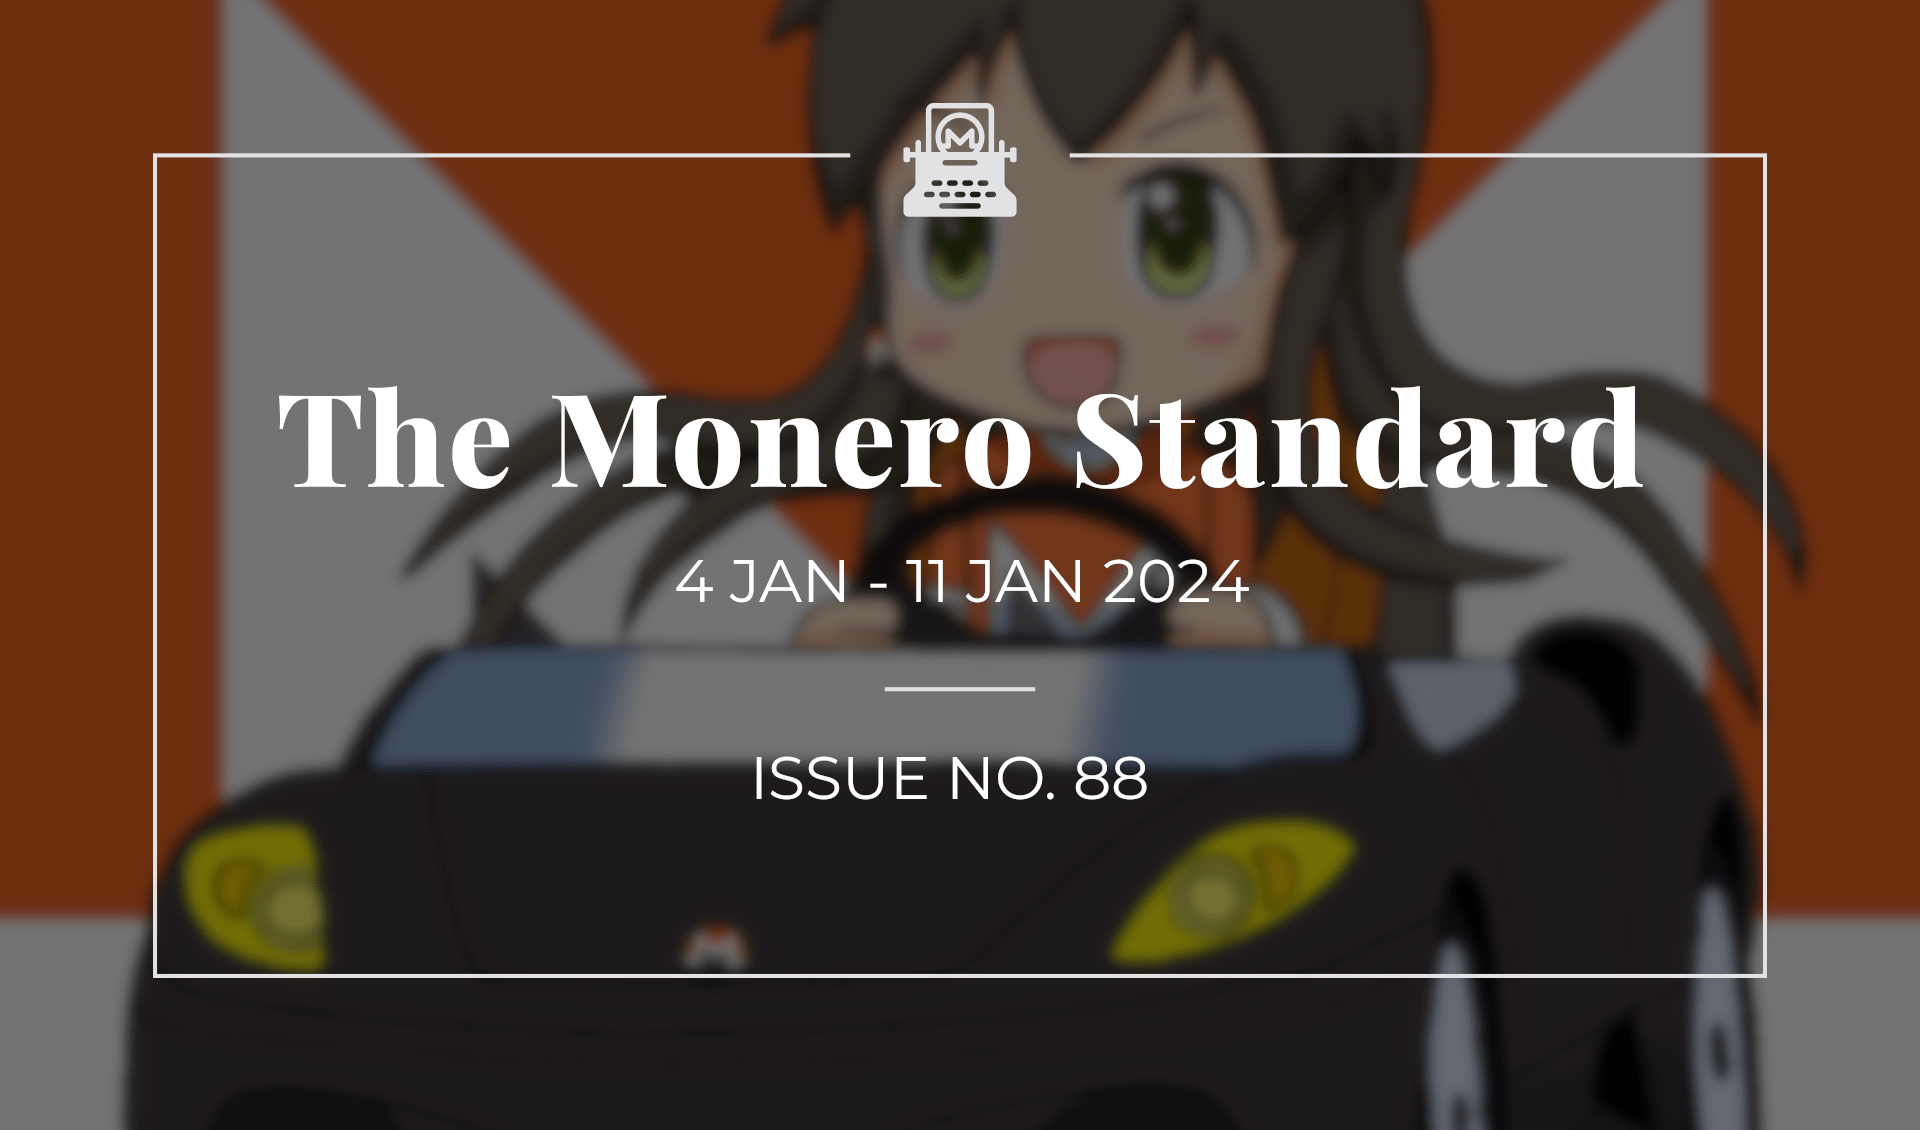 The Monero Standard #88: 4 Jan 2023 - 11 Jan 2024